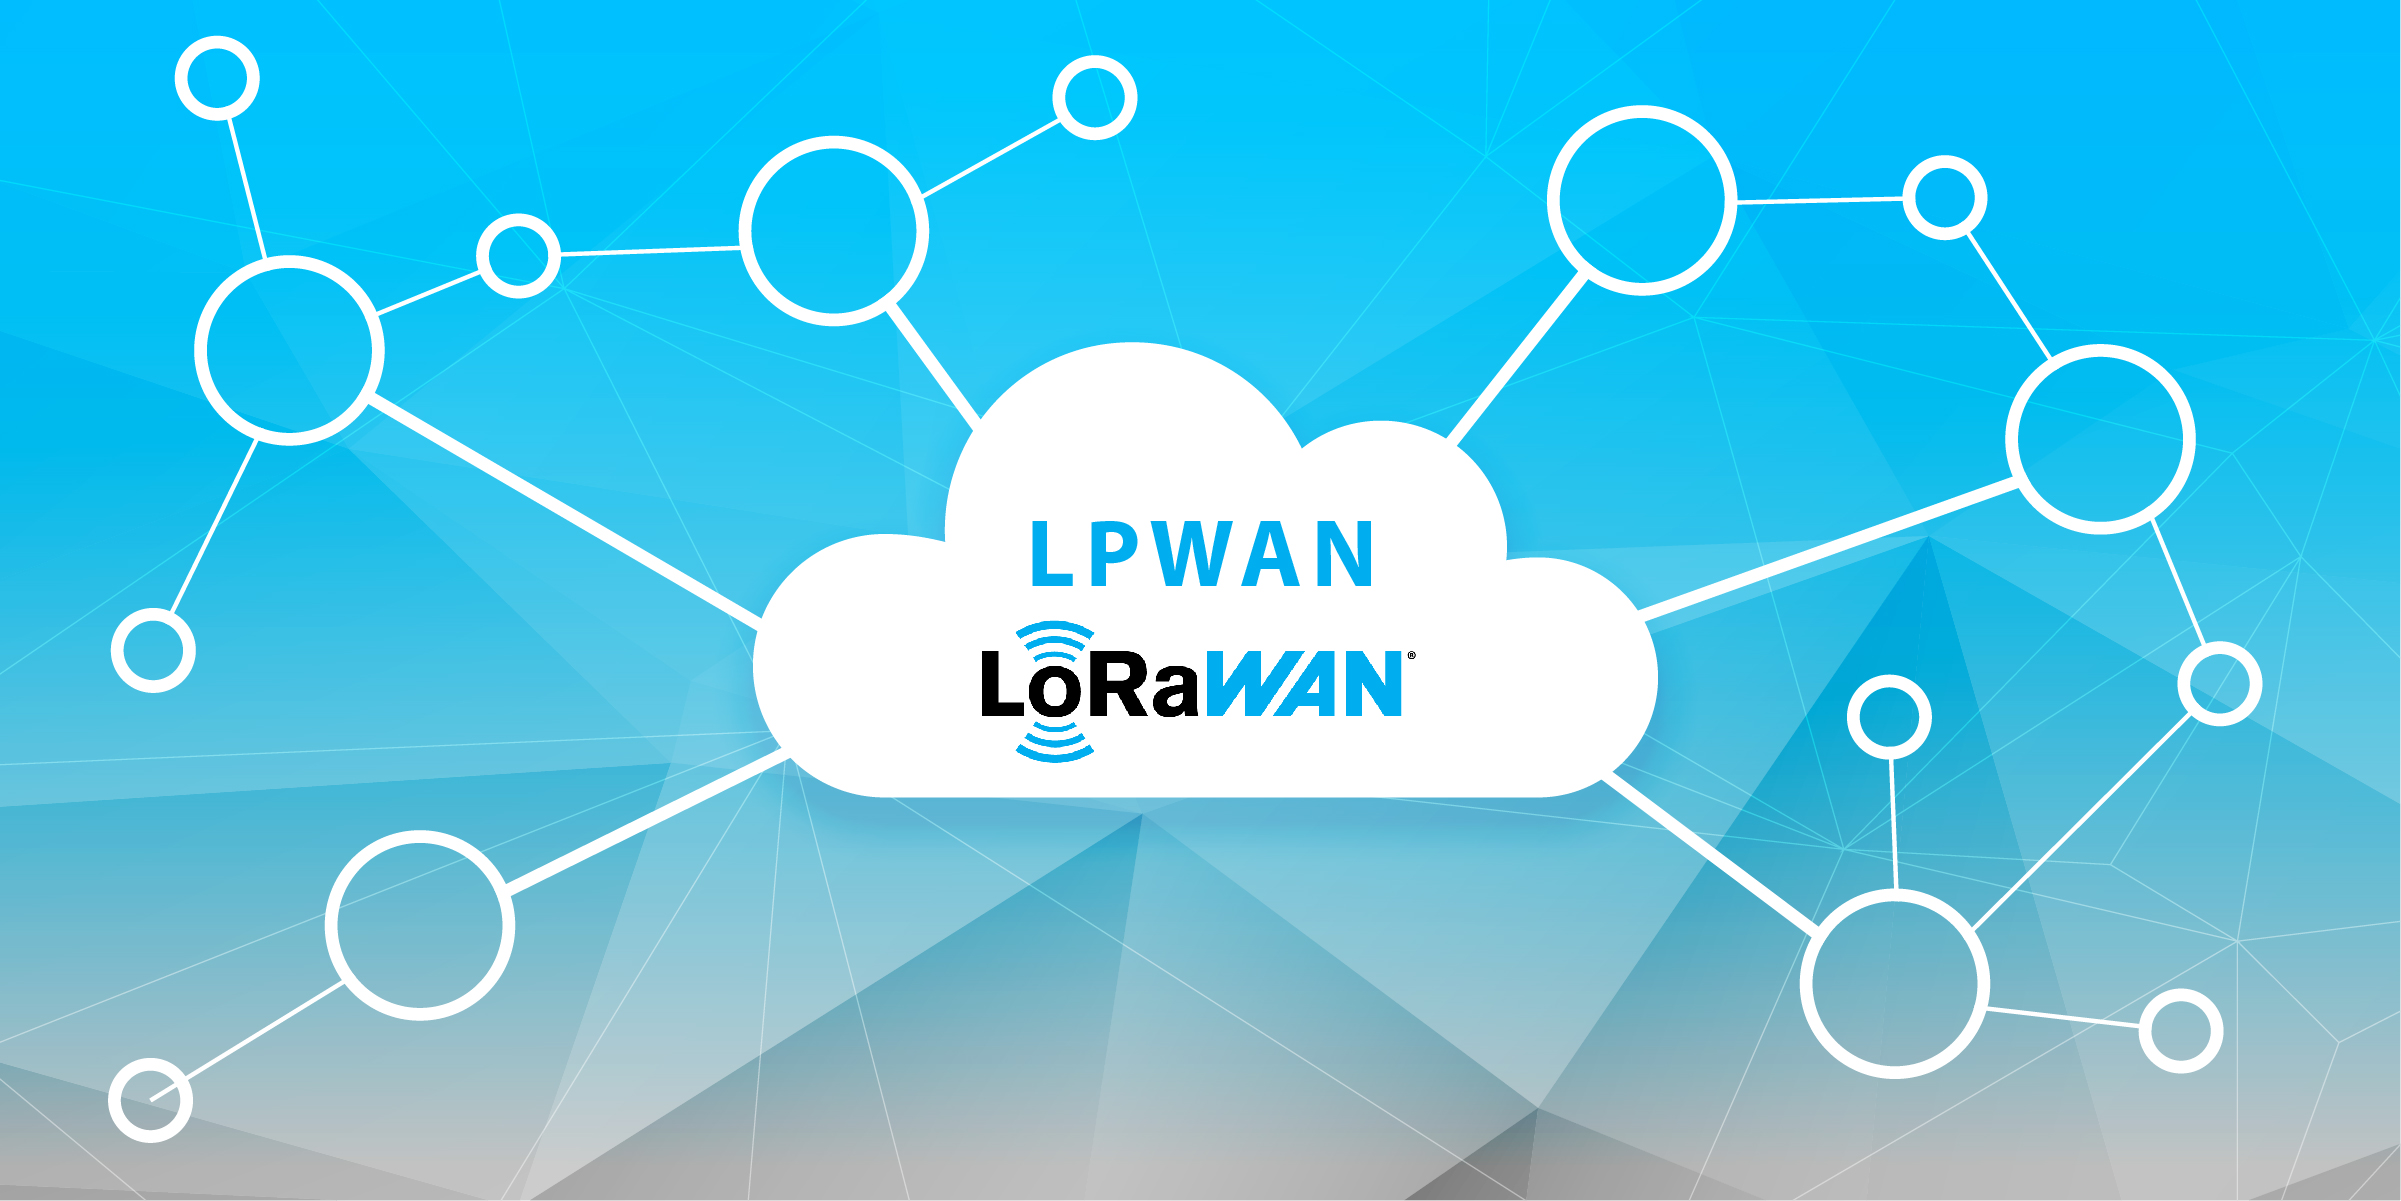 LoRaWAN vs Zigbee for Your IoT Project